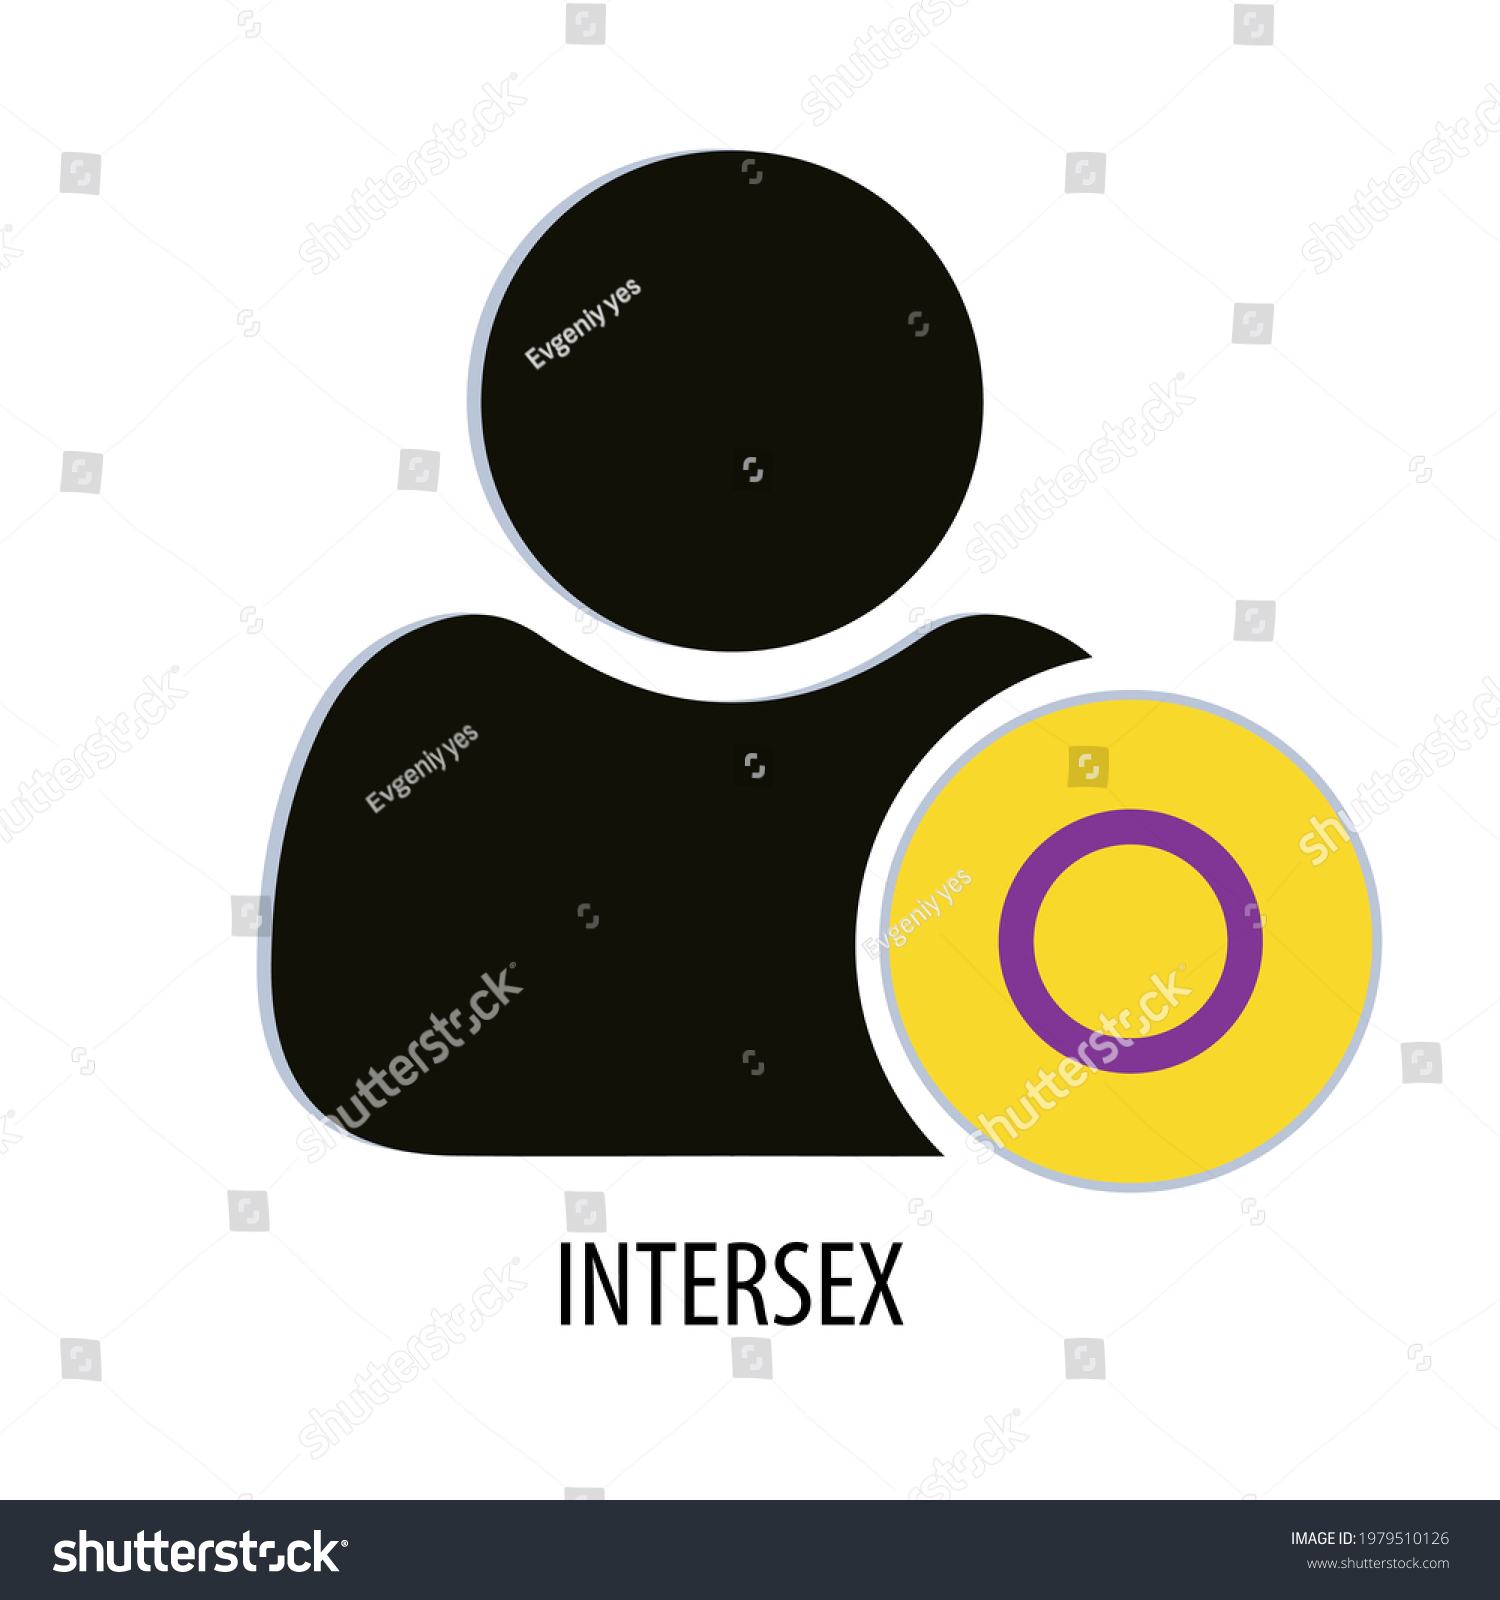 Intersex Human Sexual Identity Concept Vector Stock Vector Royalty 